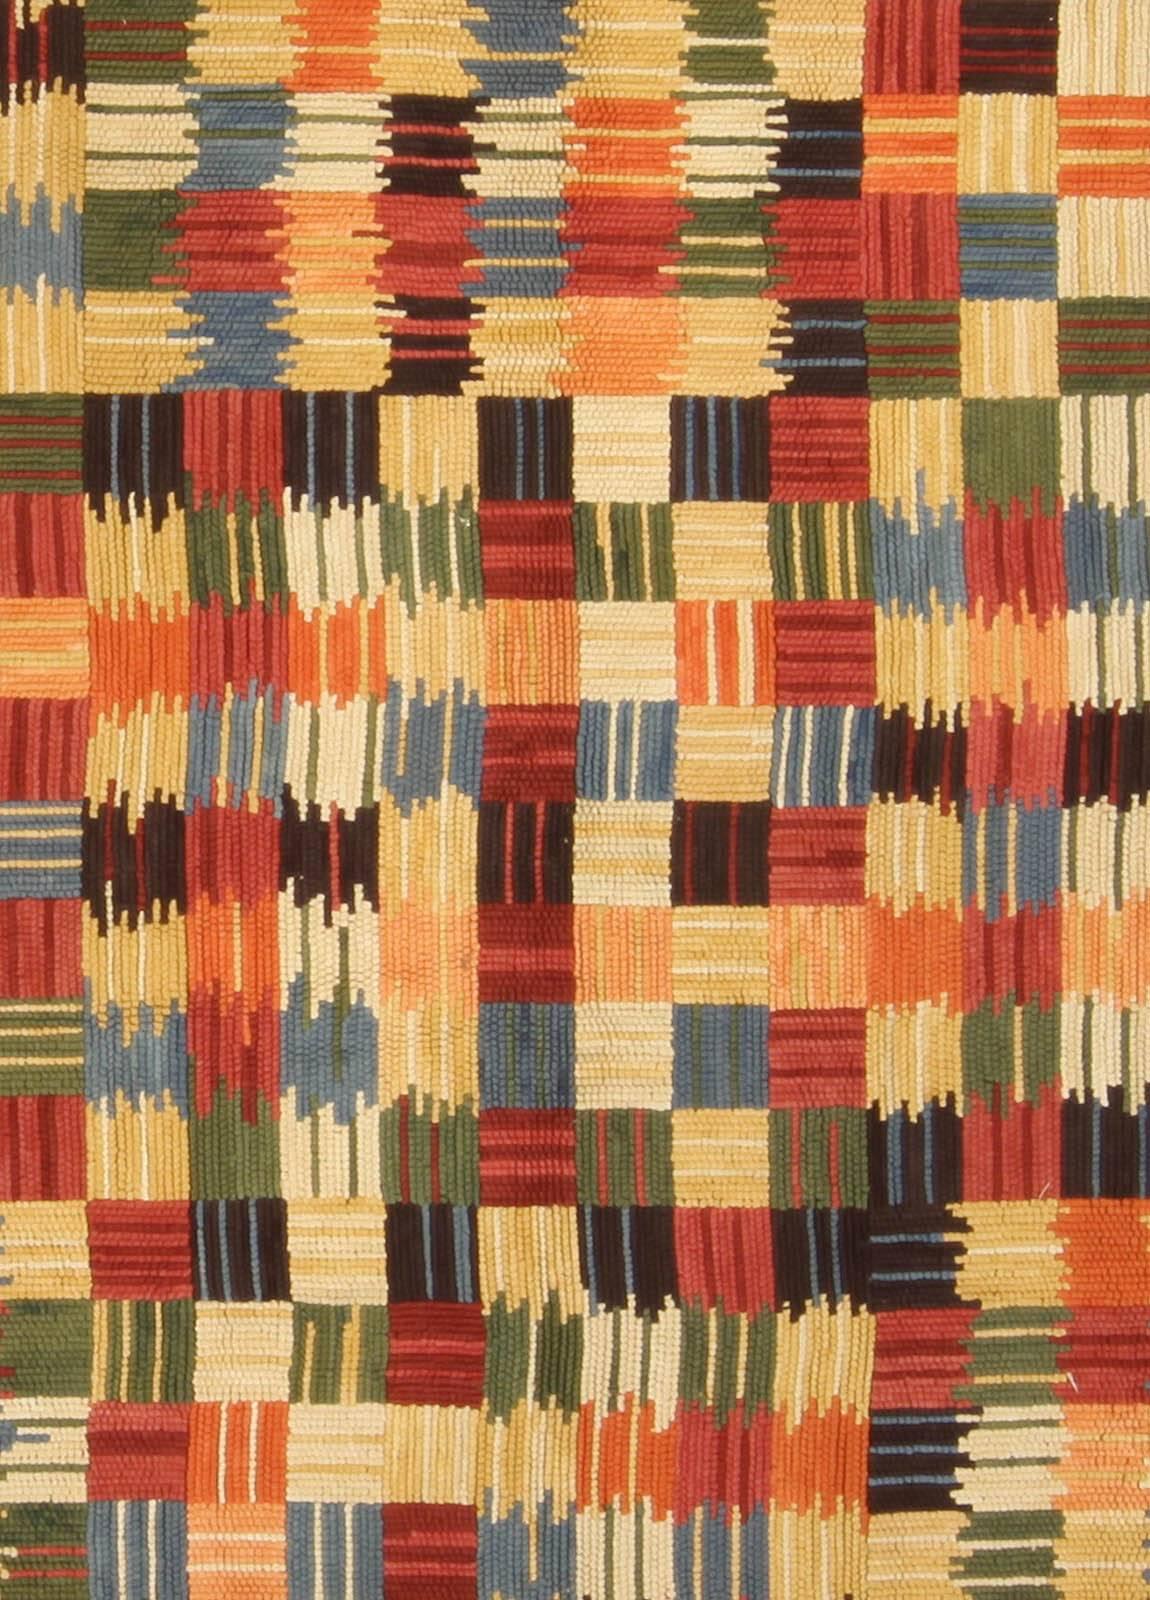 Modern Geometric design handmade cotton rug by Doris Leslie Blau
Size: 10'0